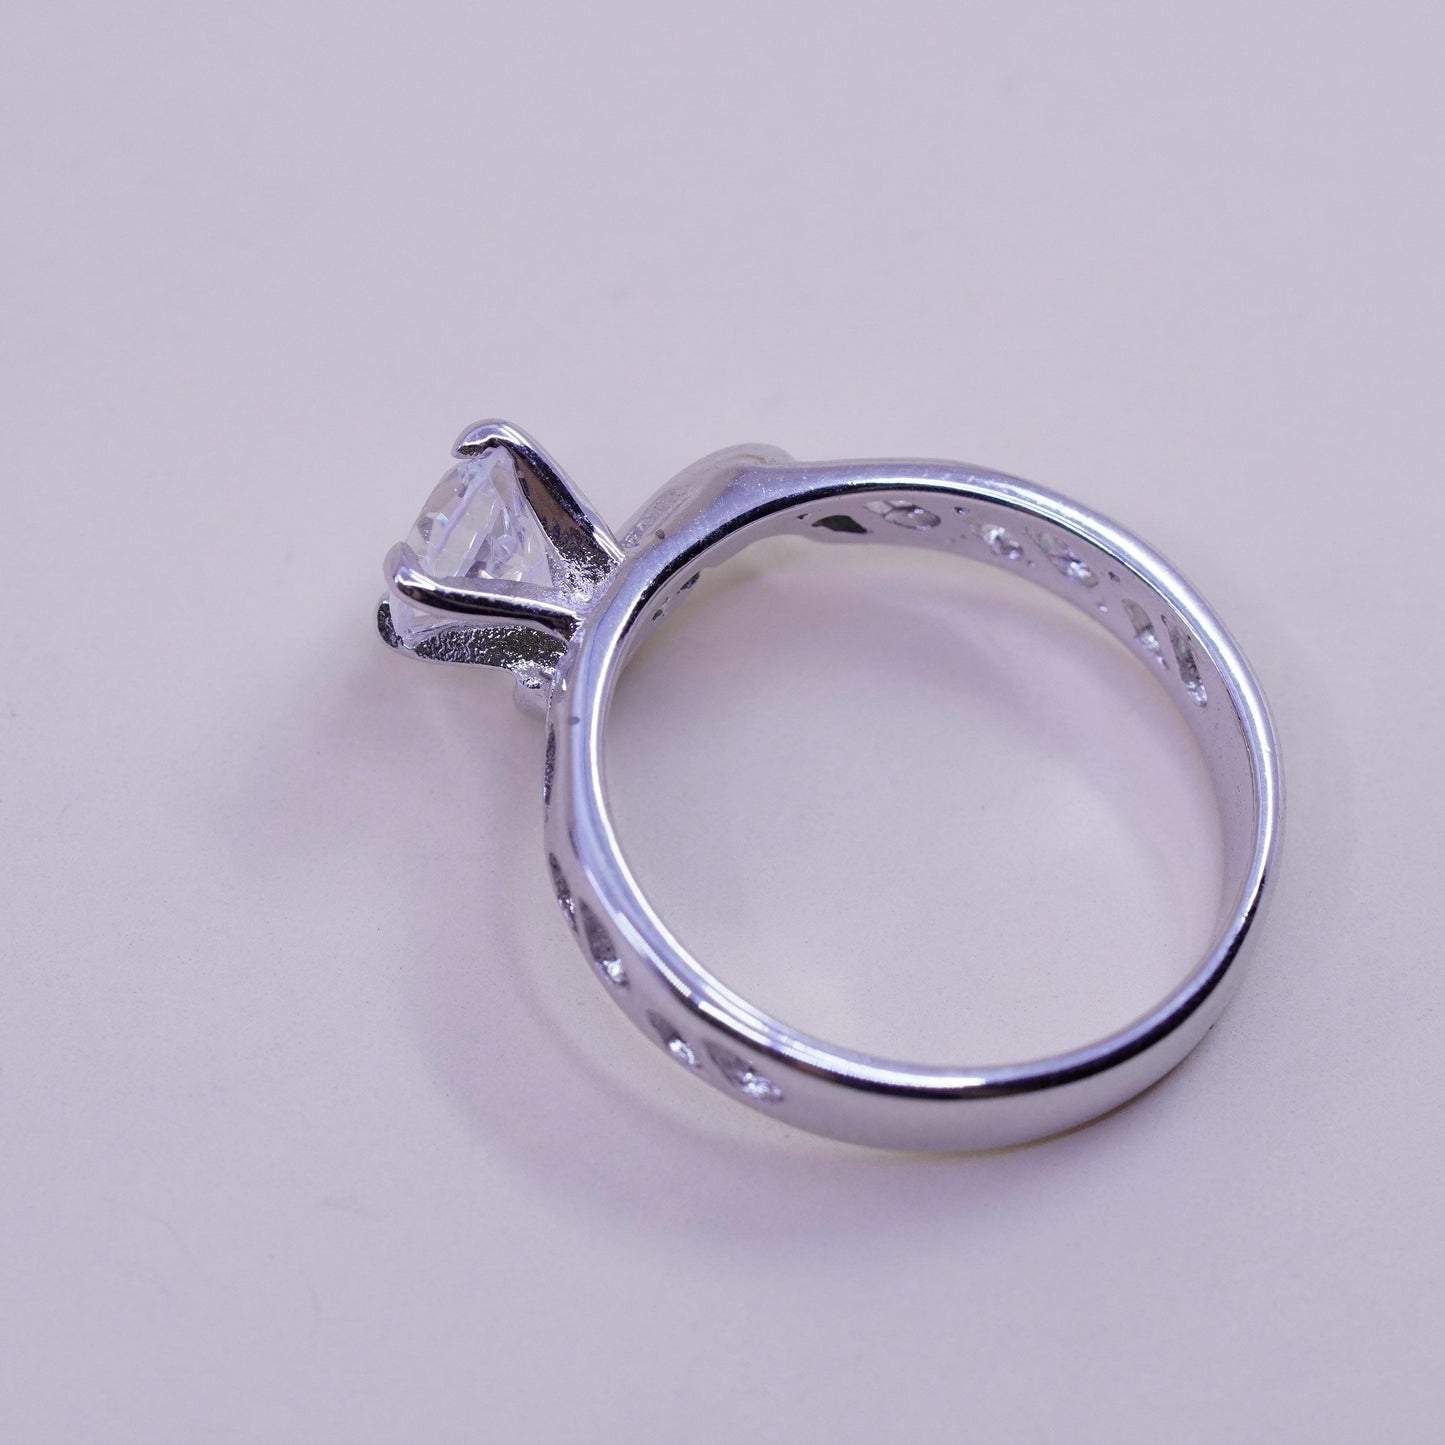 Size 8, vintage Sterling 925 silver Statement ring w/ round Cz